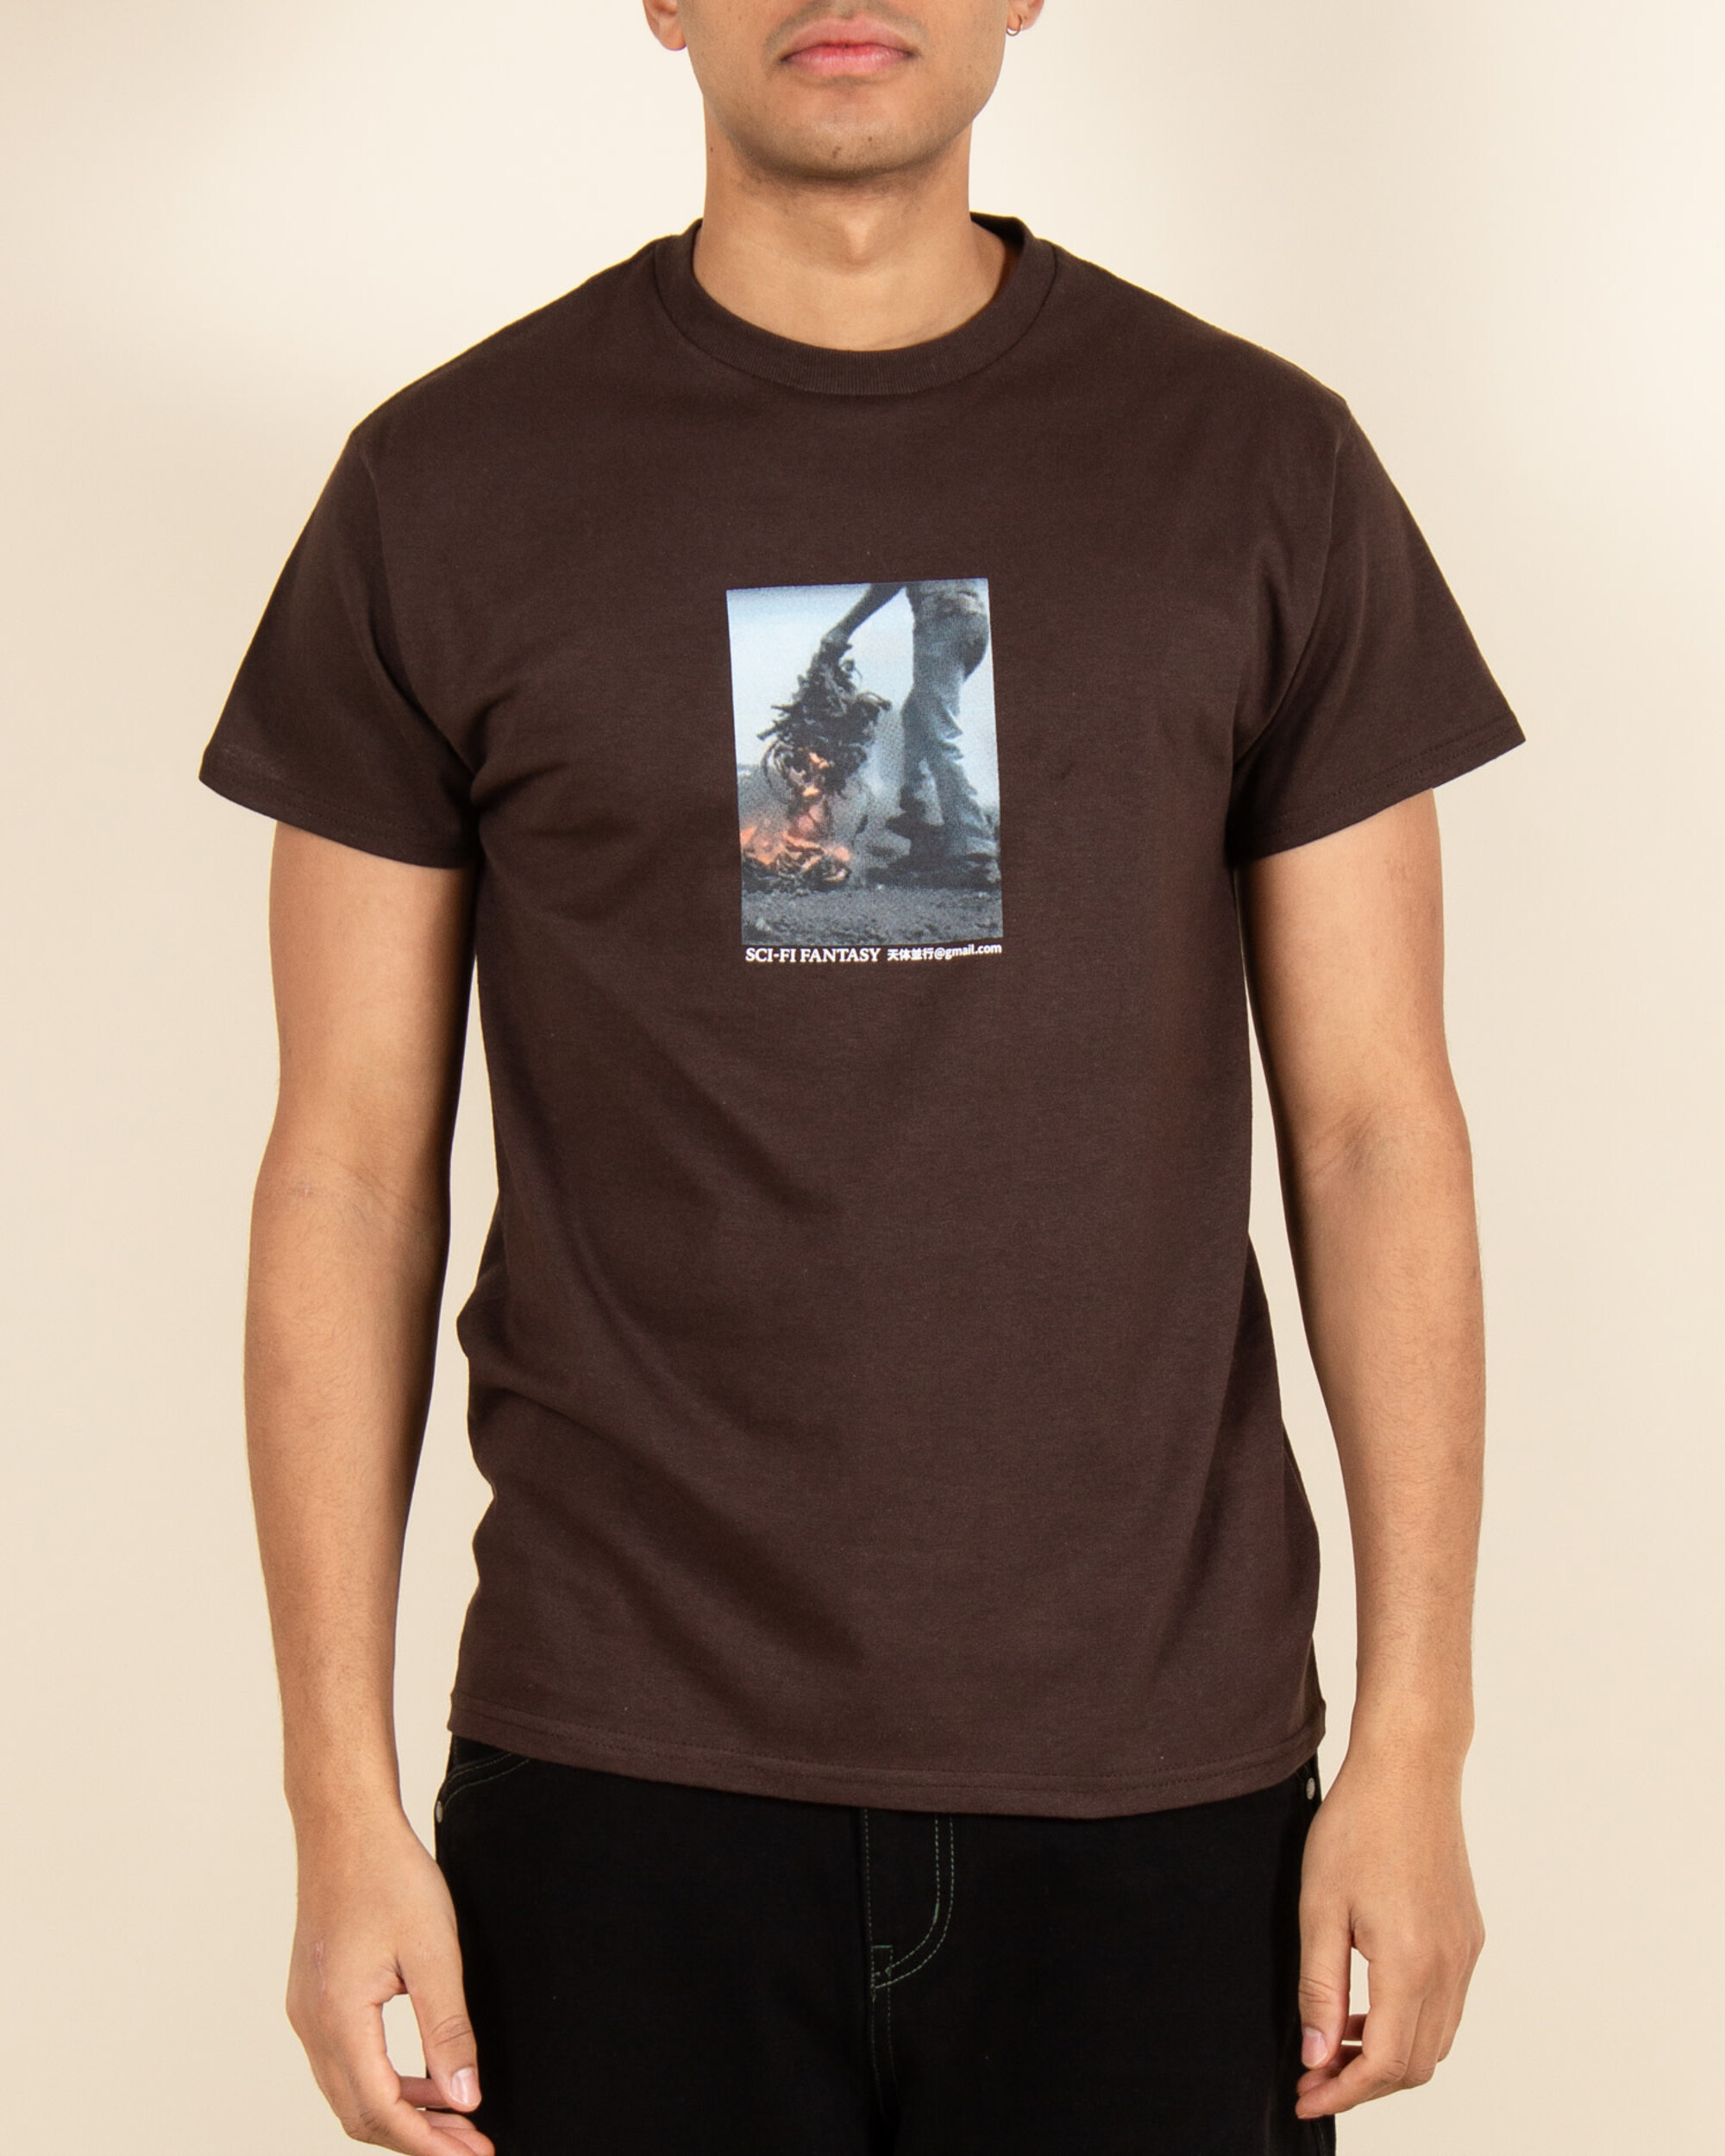 Sci-Fi Fantasy Waste T-shirt - Brown